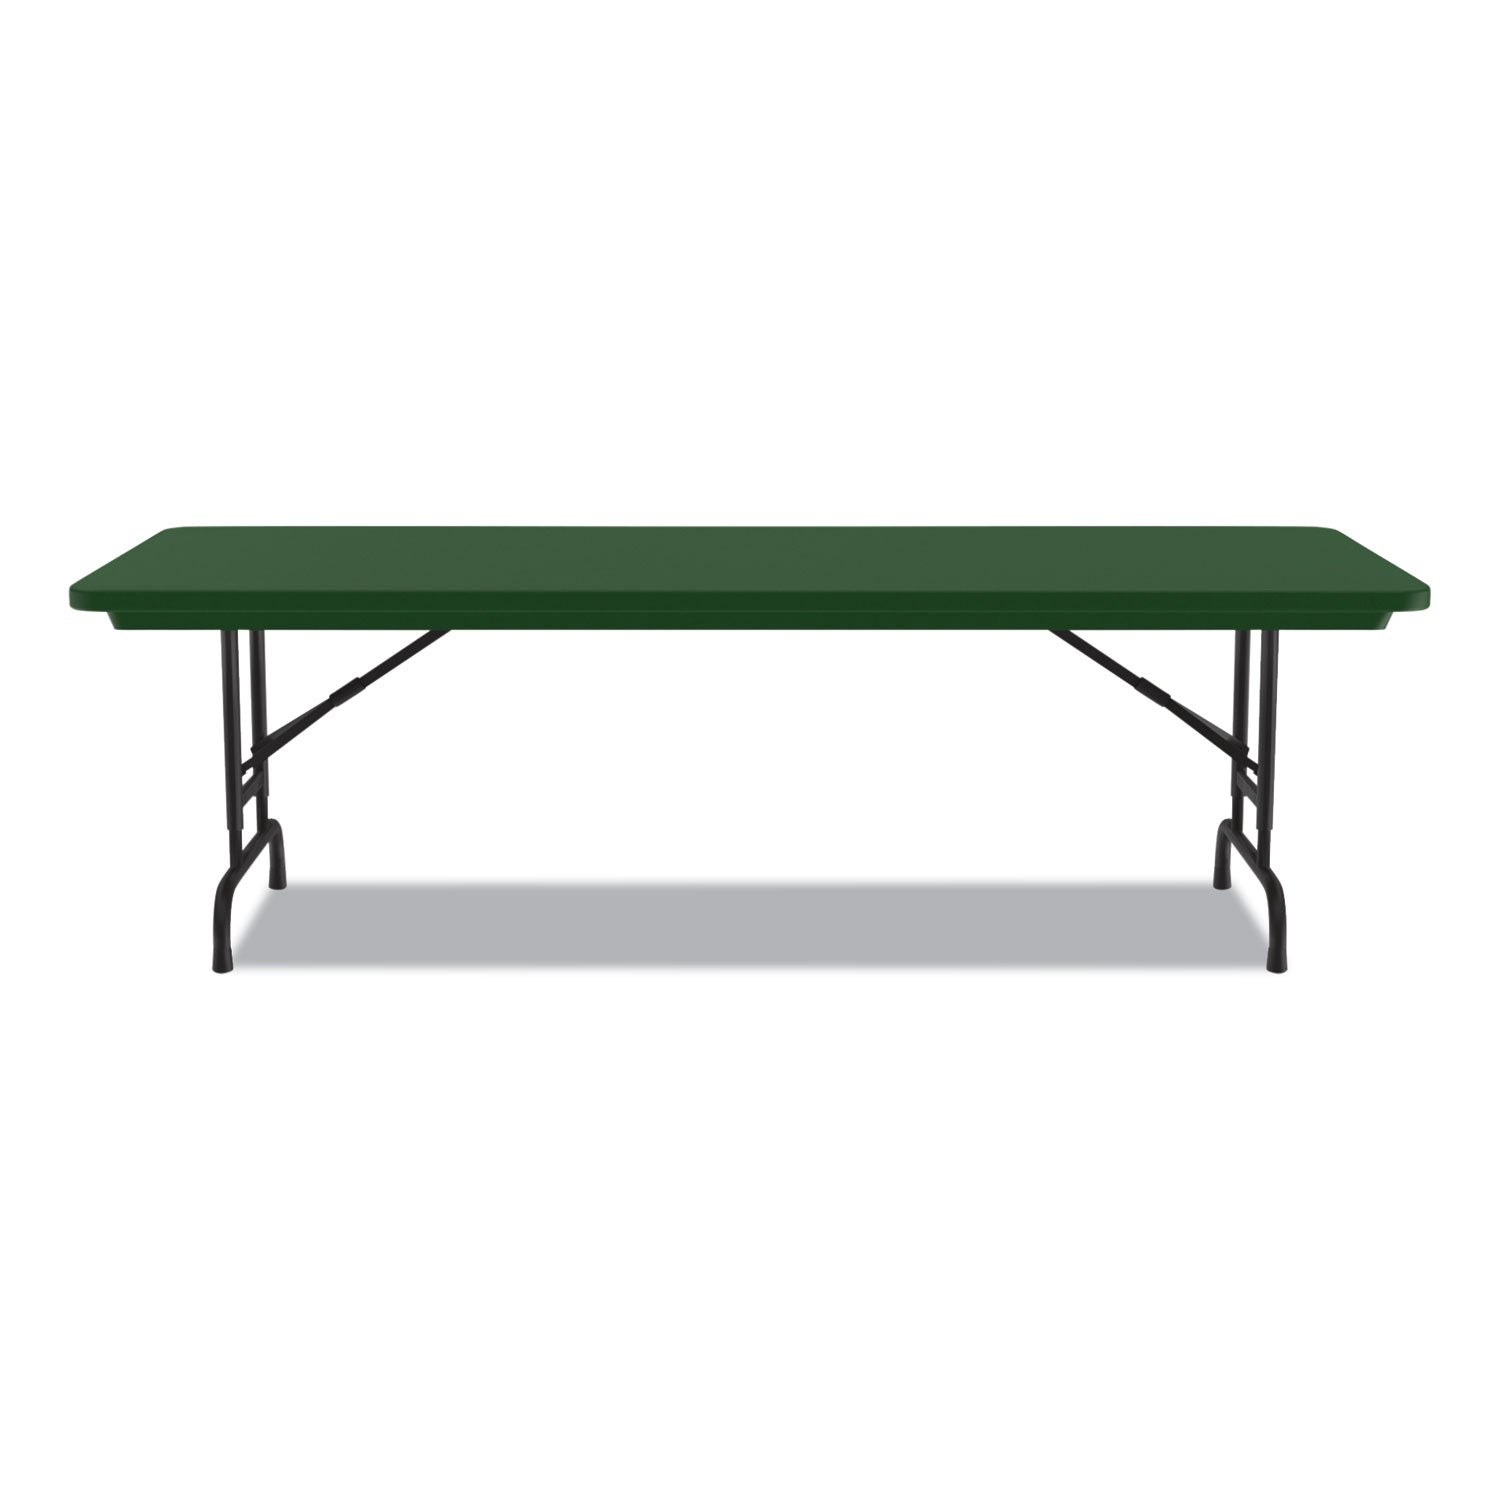 adjustable-folding-tables-rectangular-60-x-30-x-22-to-32-green-top-black-legs-4-pallet-ships-in-4-6-business-days_crlra3060294p - 6